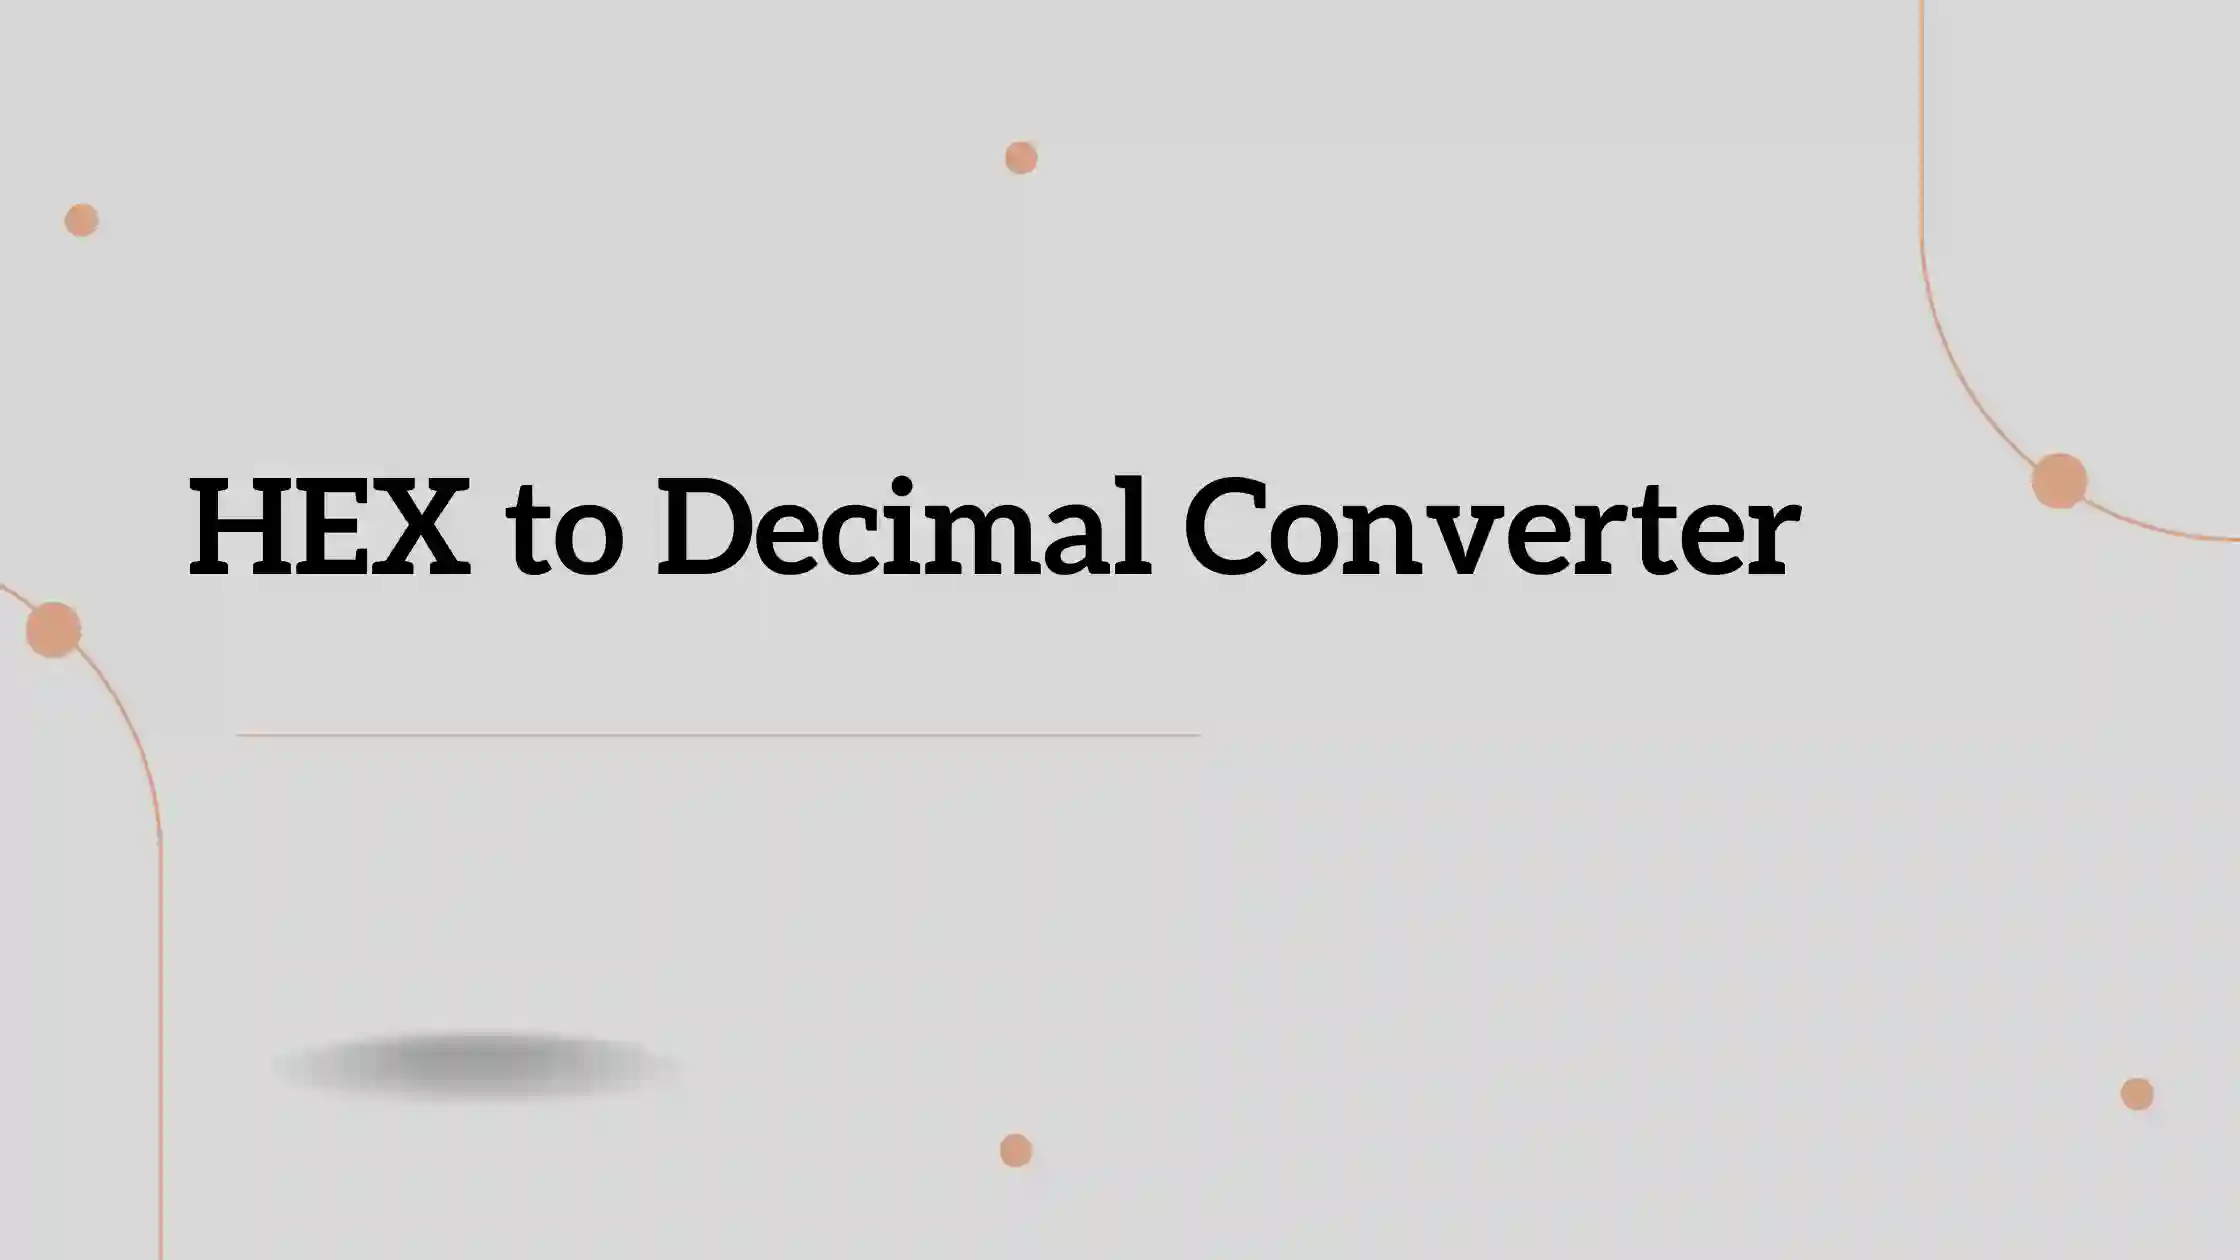 HEX to Decimal Converter